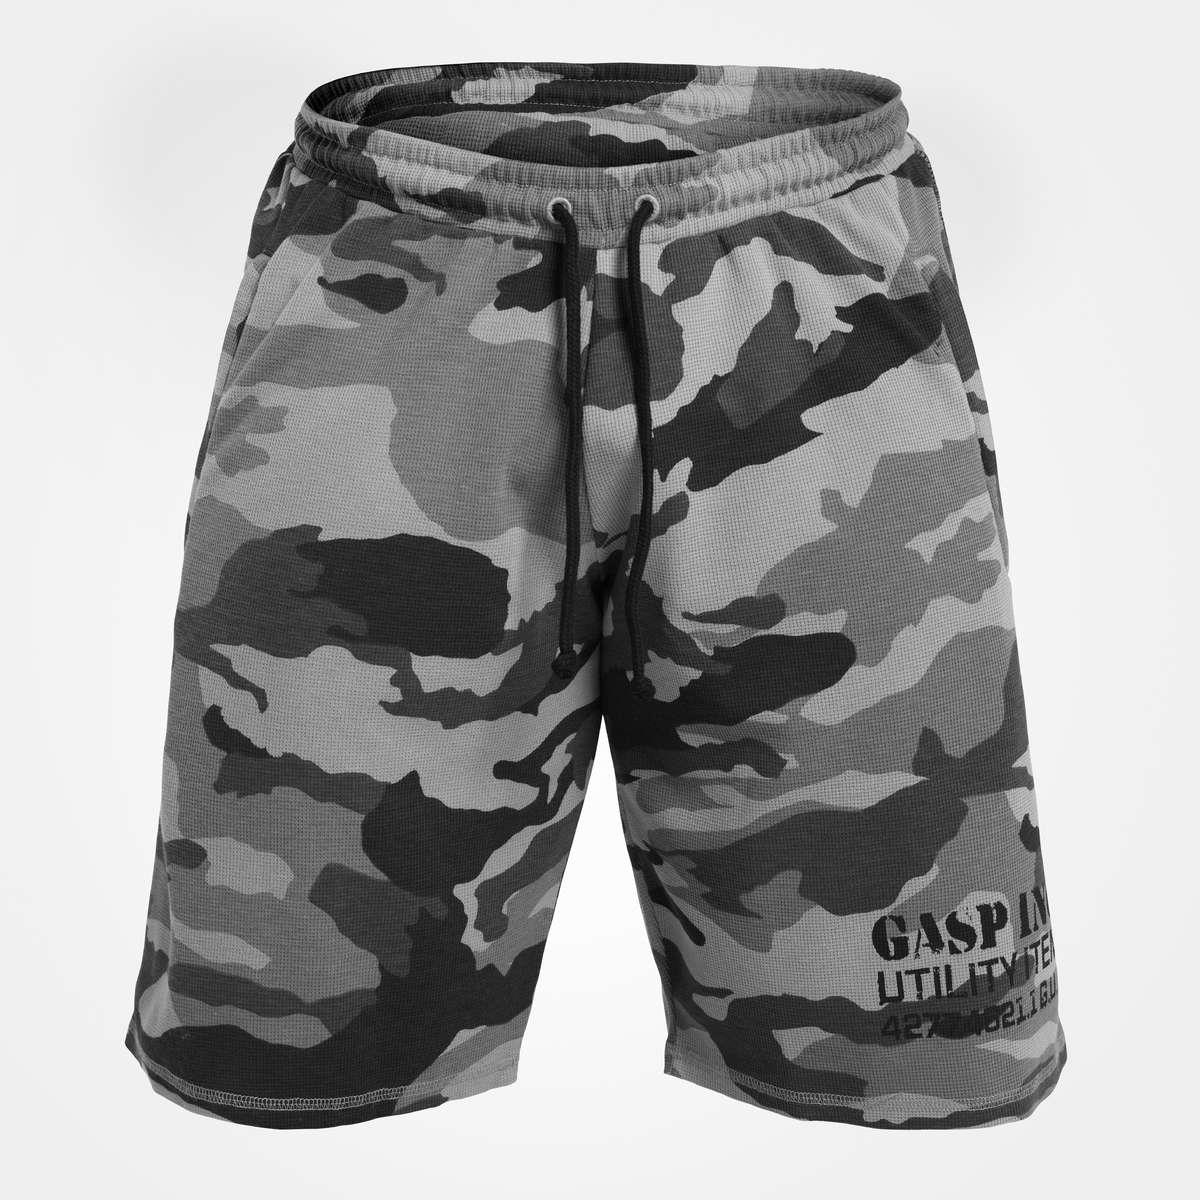 Thermal shorts, Tactical camo